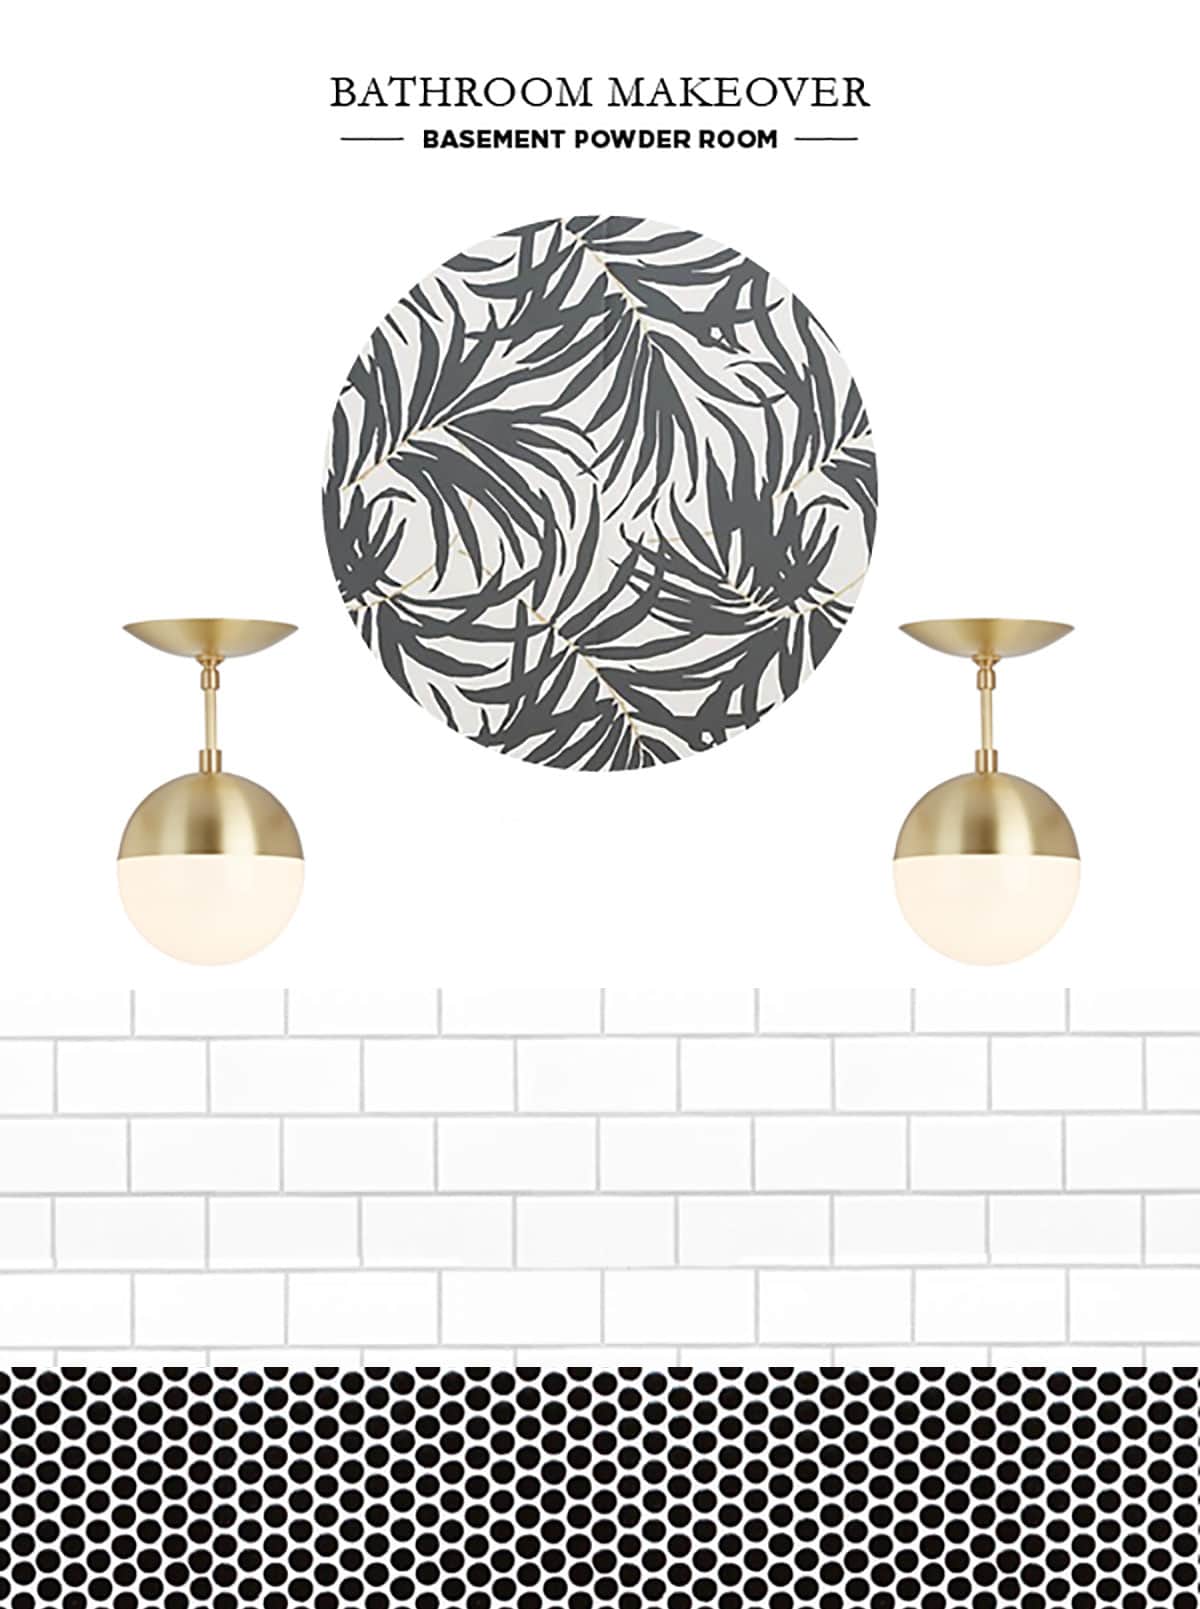 Basement bathroom renovation - bathroom makeover design mood board with black and white wallpaper